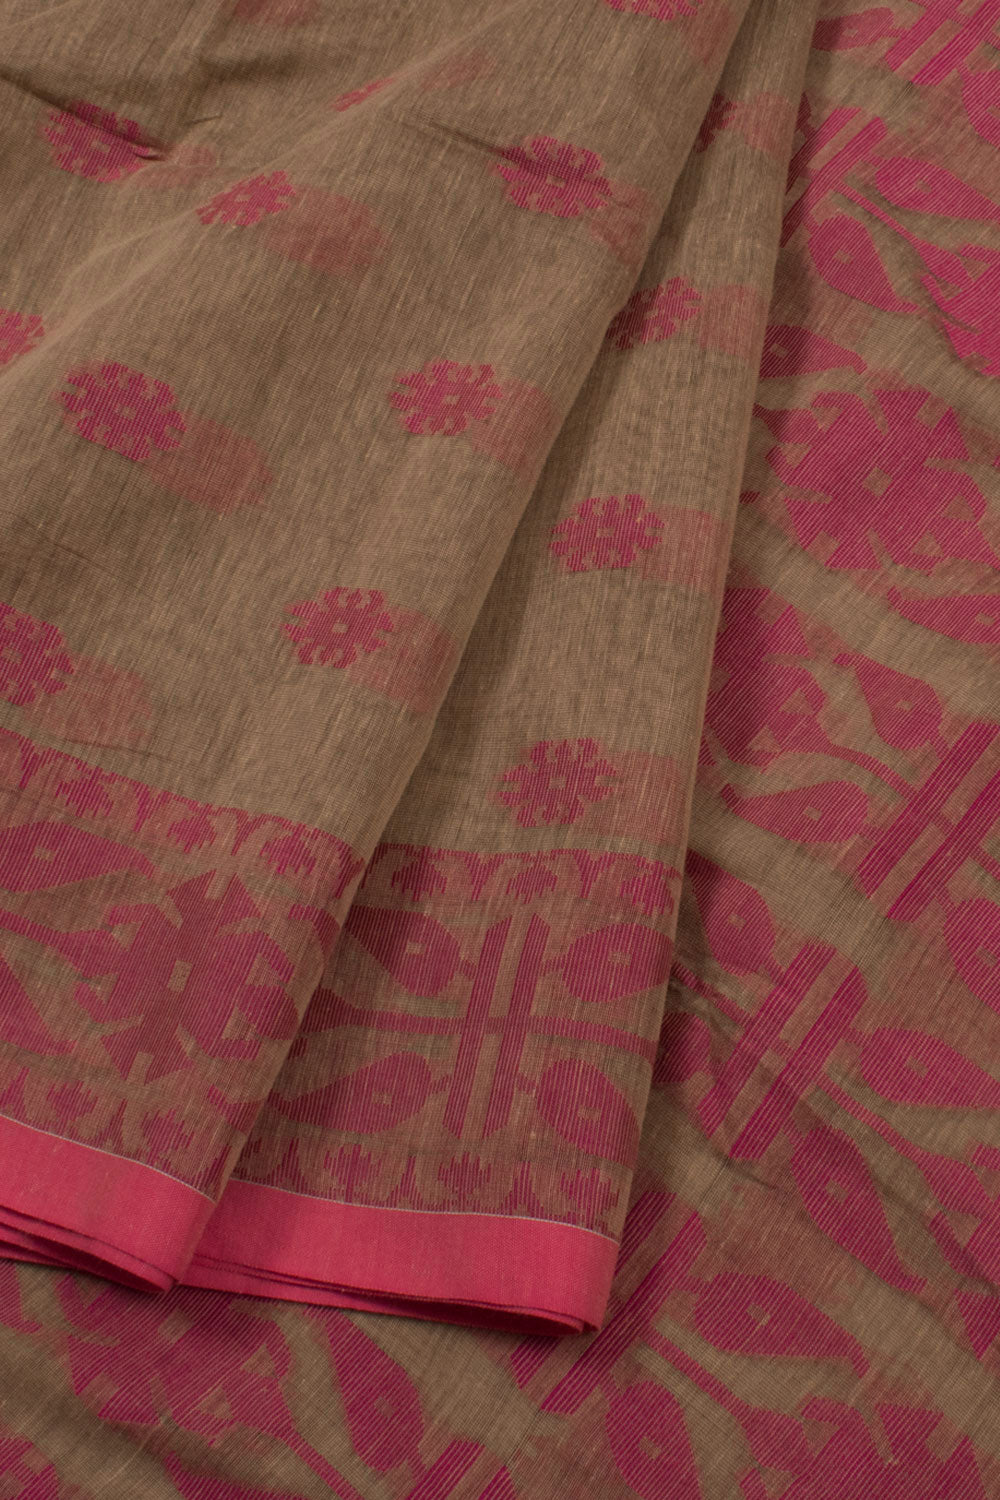 Handloom Jamdani Style Cotton Saree 10058446